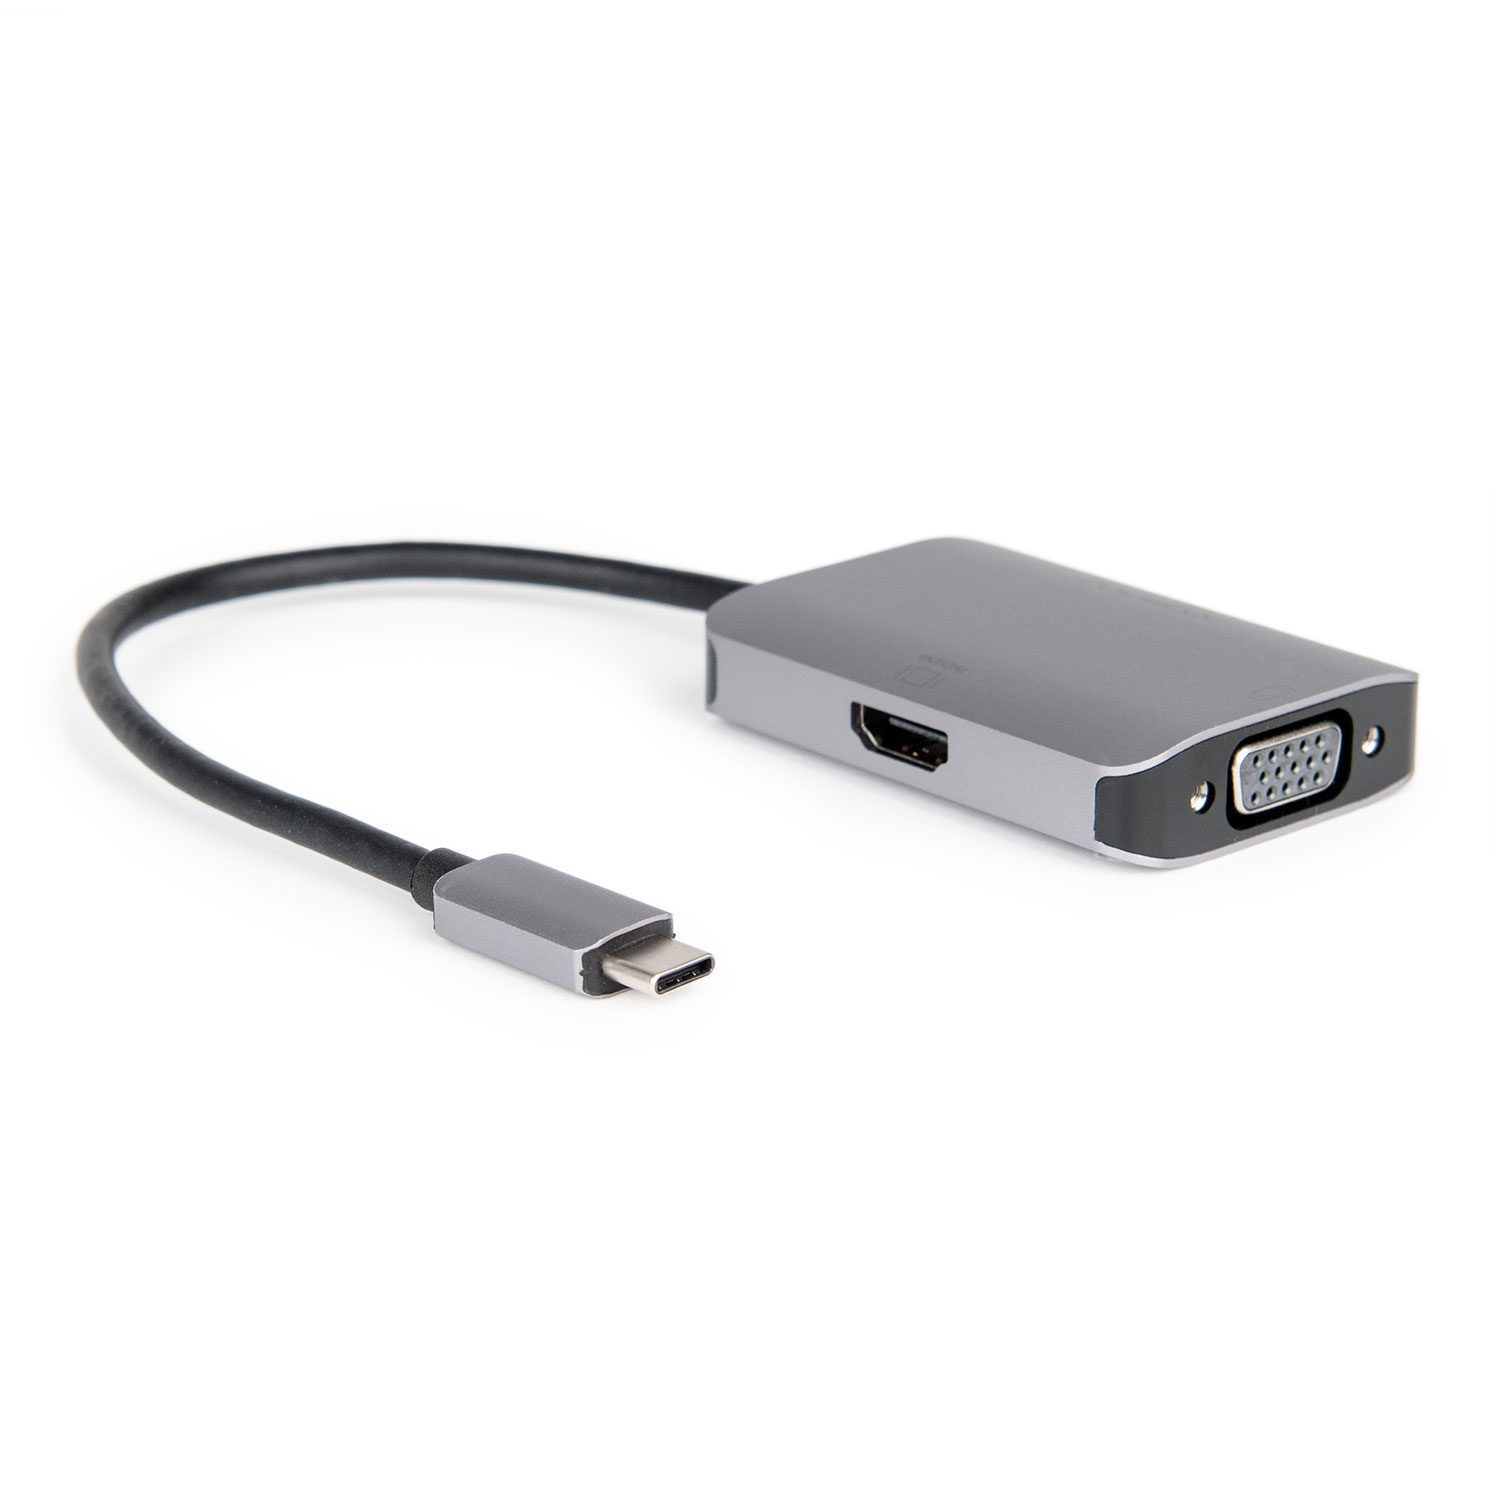 Berri Udvinding pumpe USB-C to HDMI & VGA Monitor Adapter PC & Mac - 4k@30Hz